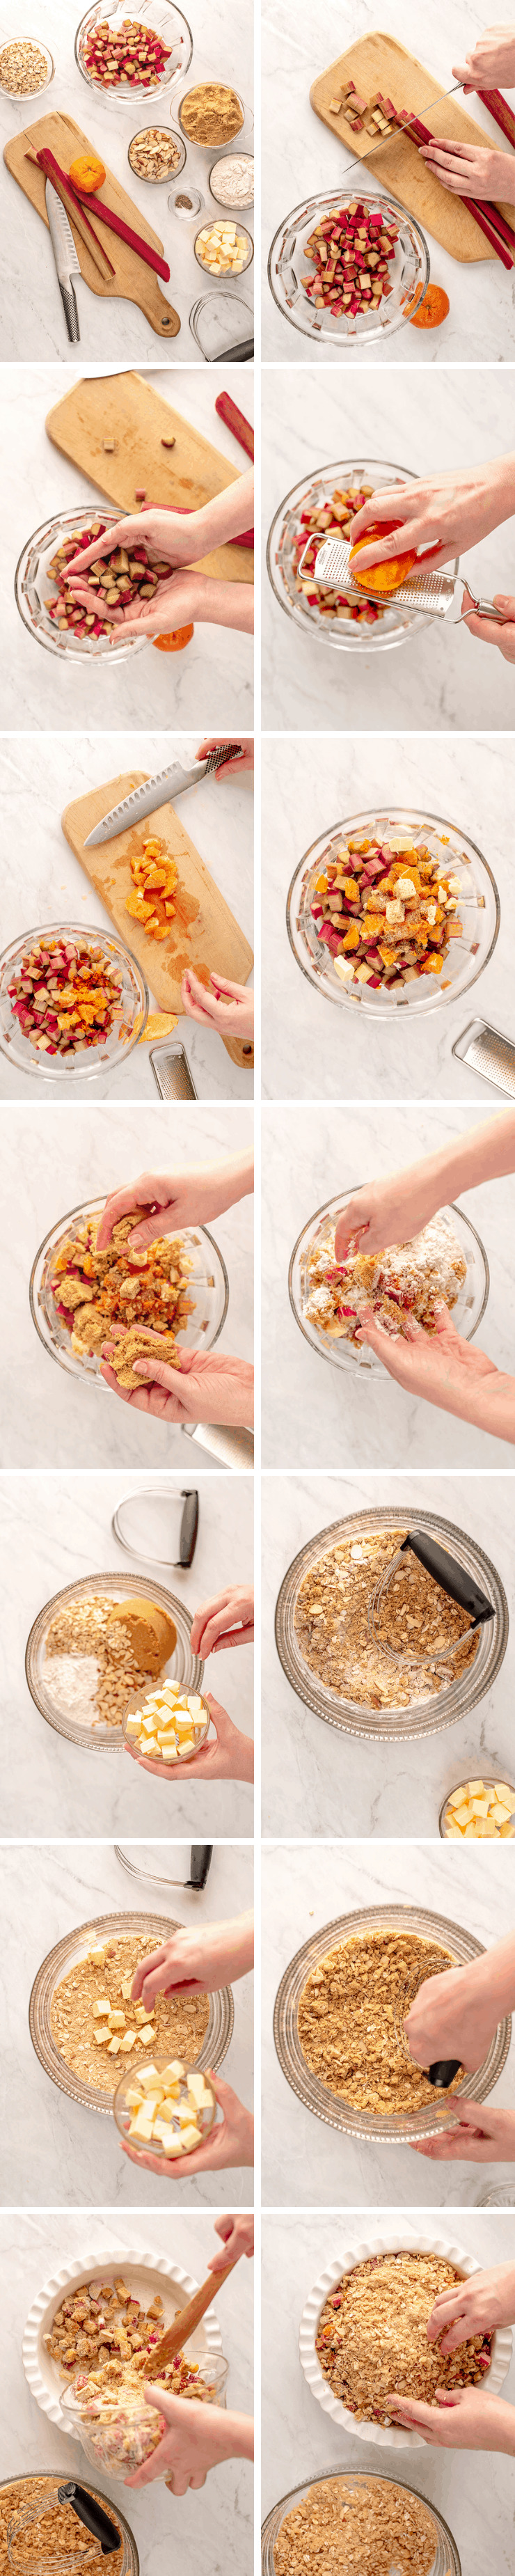 Untitled design 1 - Old Fashioned Rhubarb Crisp Recipe